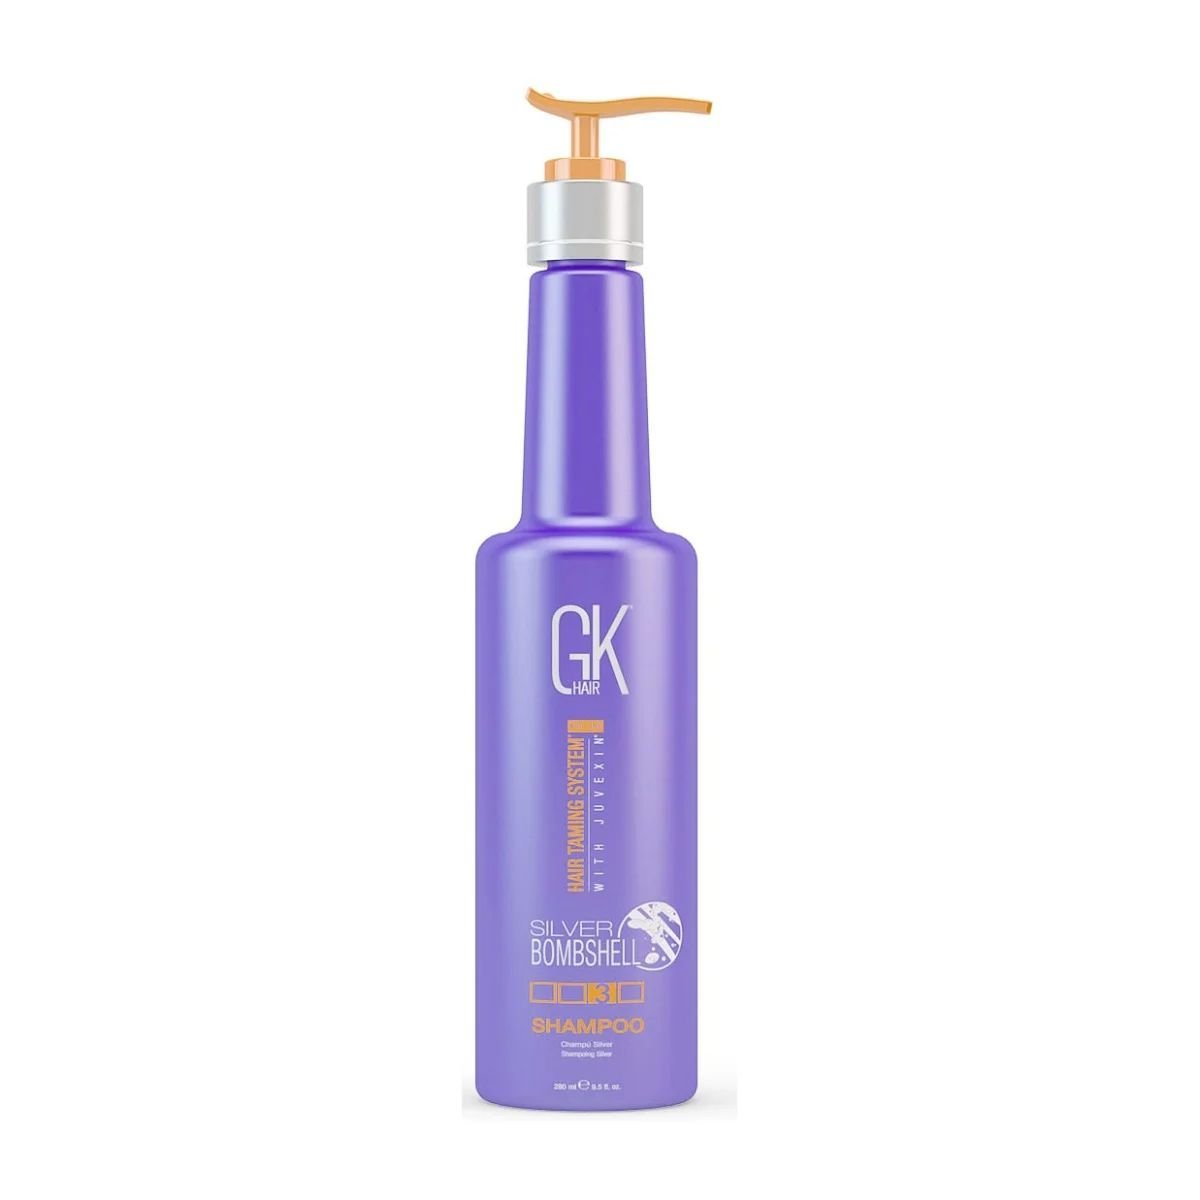 GK Global Keratin Silver Shampoo Bombshell - 280ml - Bloom Pharmacy